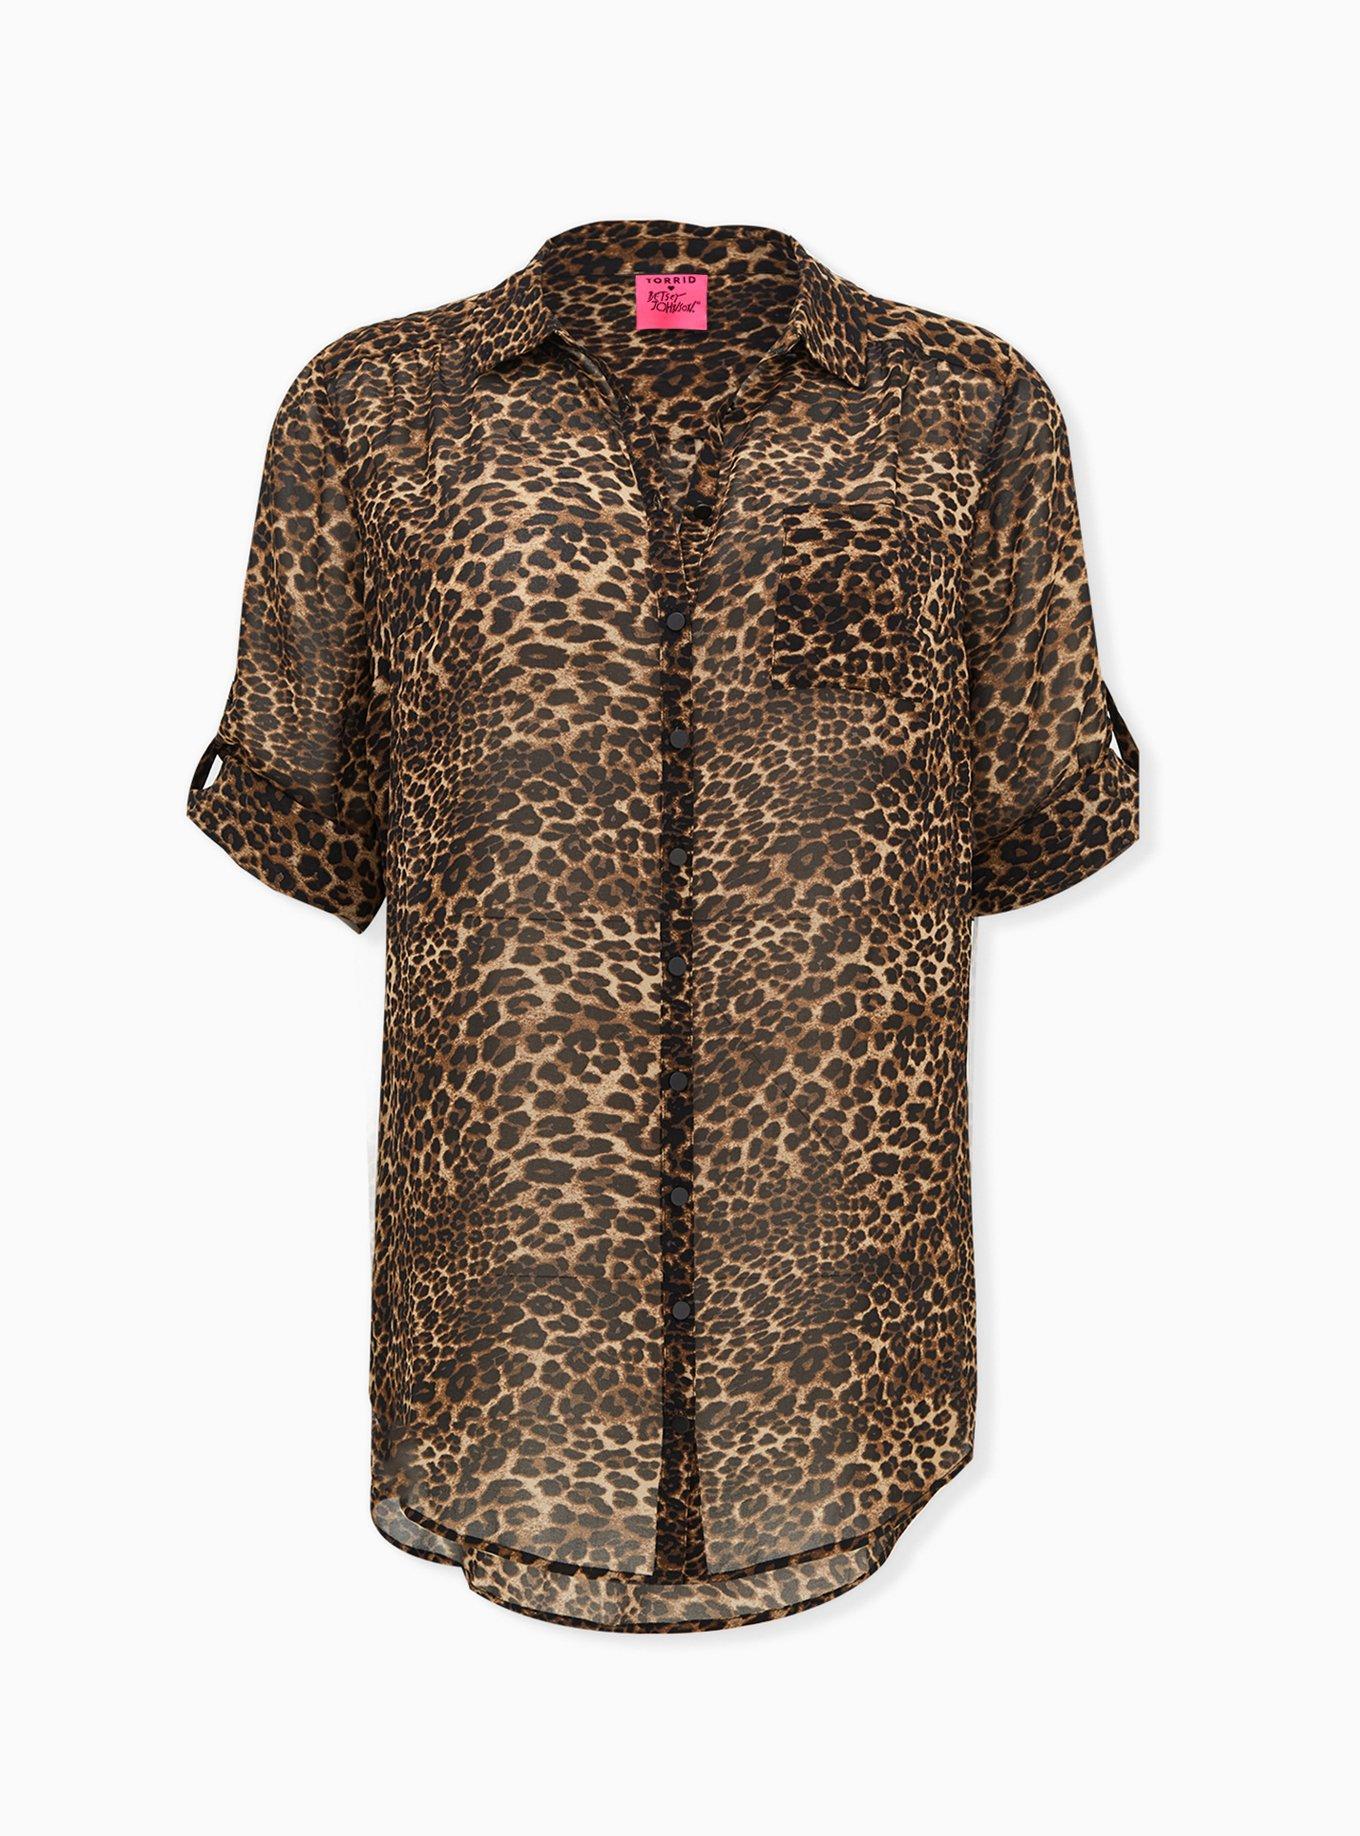 Plus Size - Betsey Johnson Leopard Sheer Chiffon Tunic - Torrid